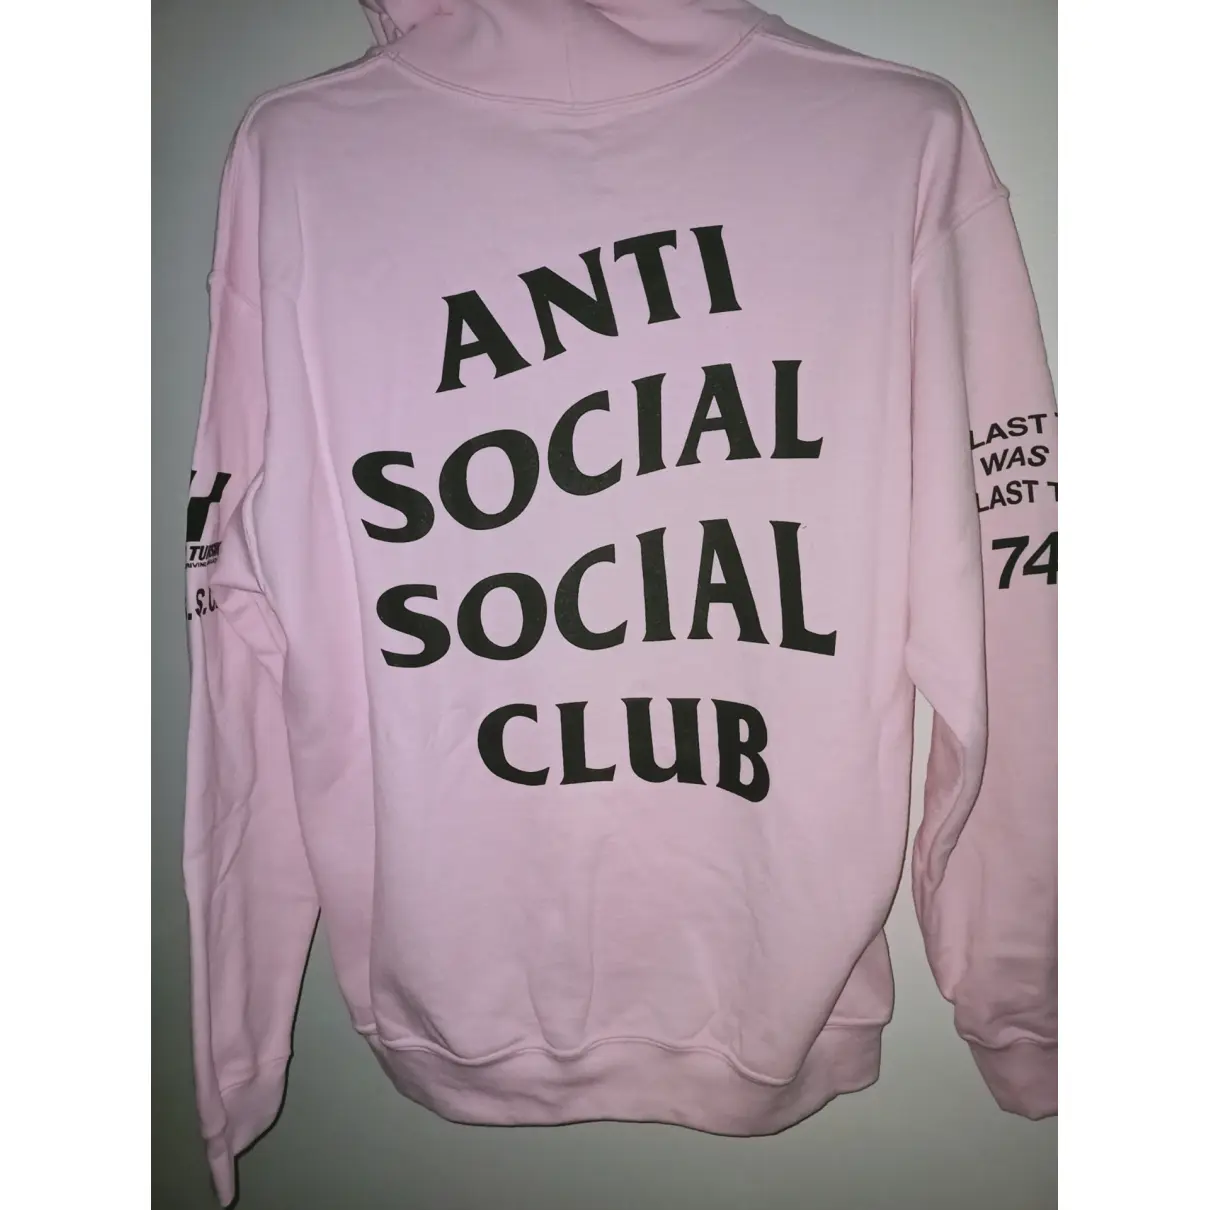 Buy Anti Social Social Club Knitwear & sweatshirt online